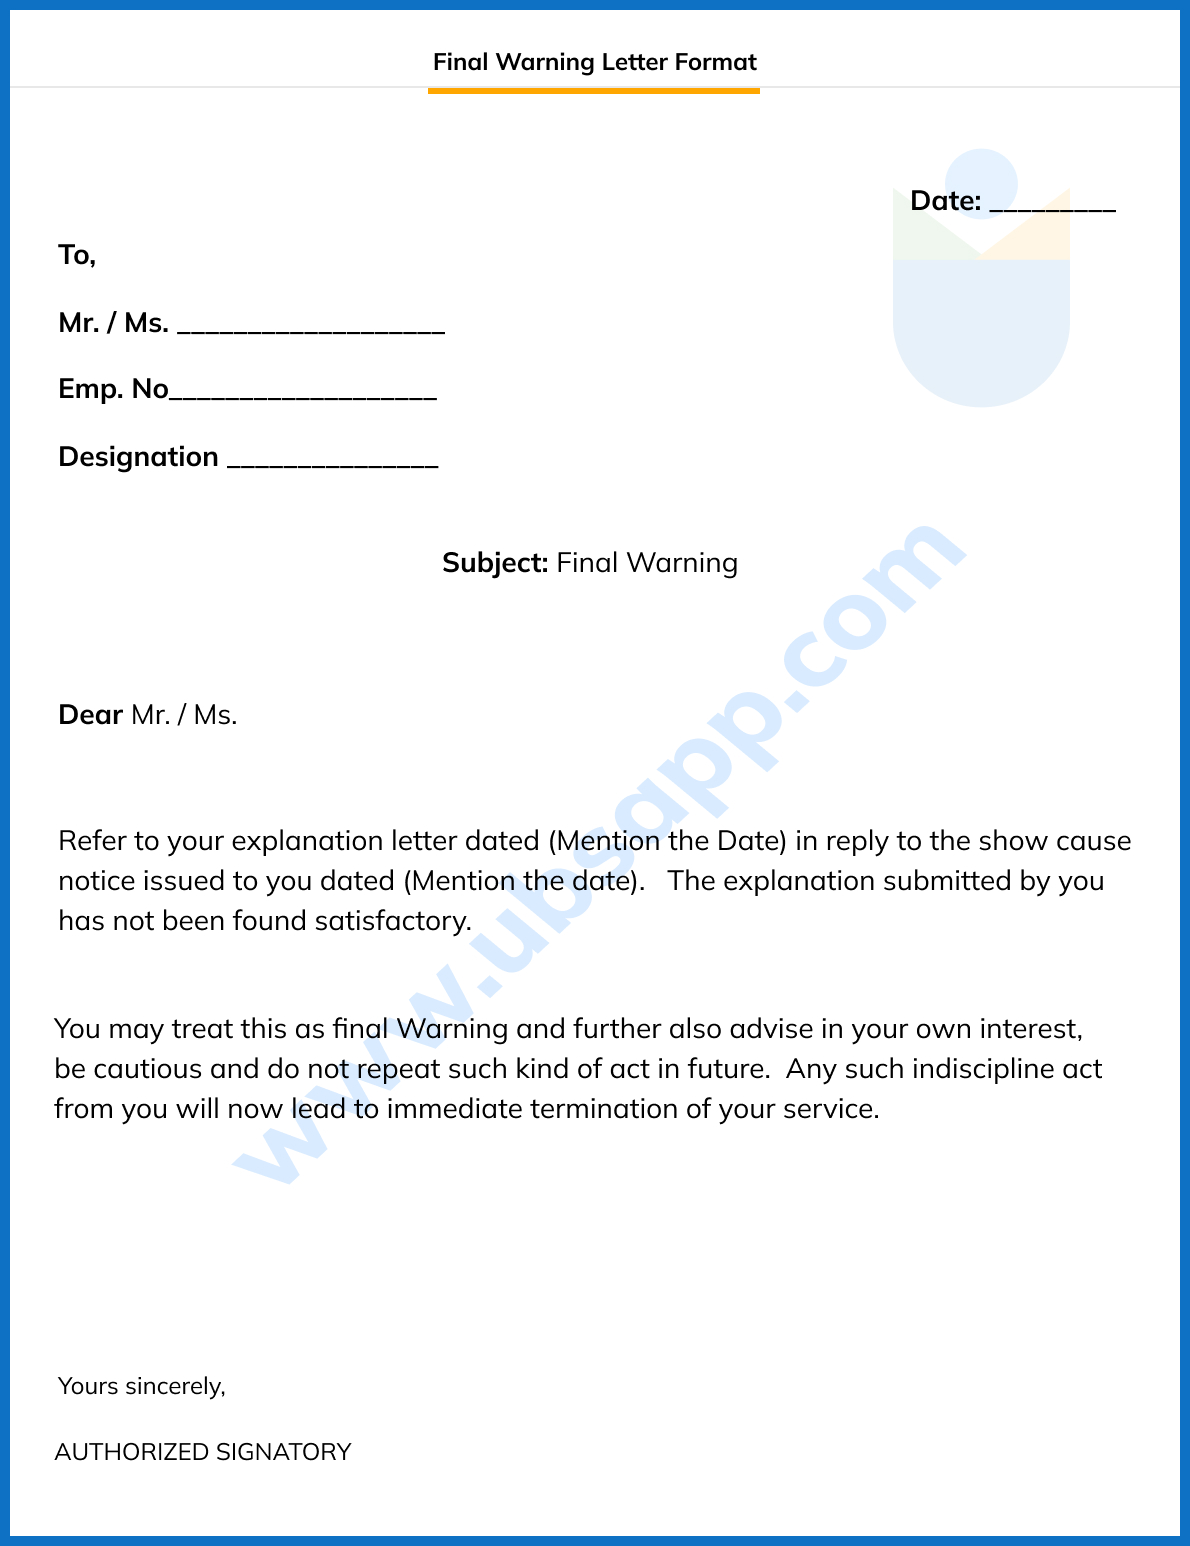 Final Warning Letter Format